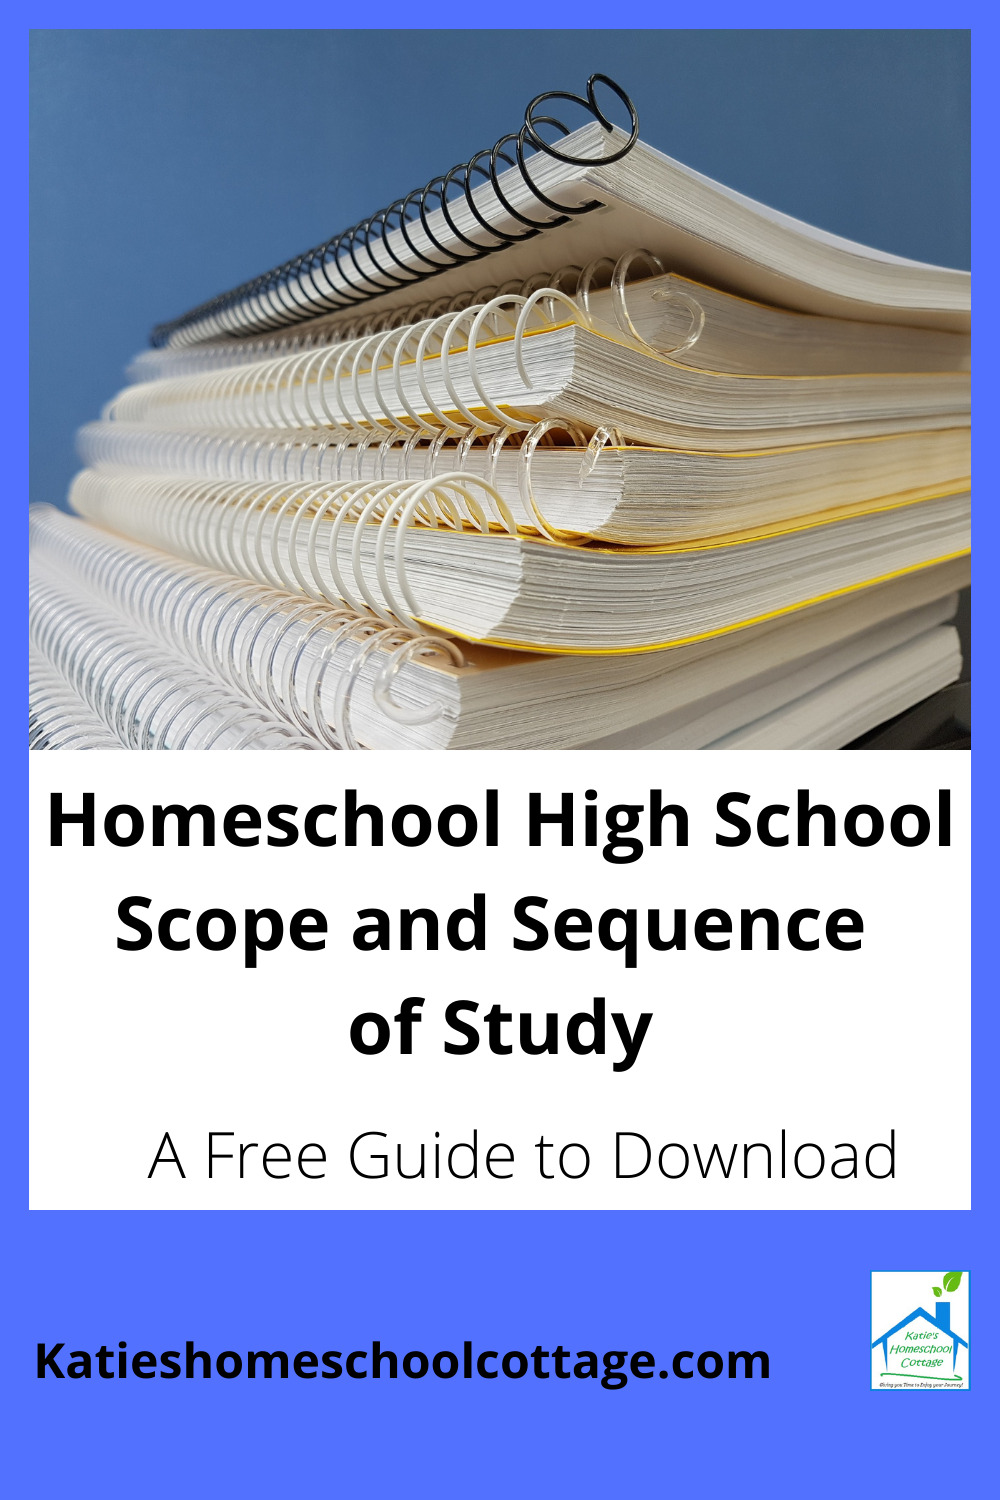 Homeschool High School Scope and Sequence Guide #homeschool #highschool #scopeandsequence #freebie #printable #highschoolcourseofstudy